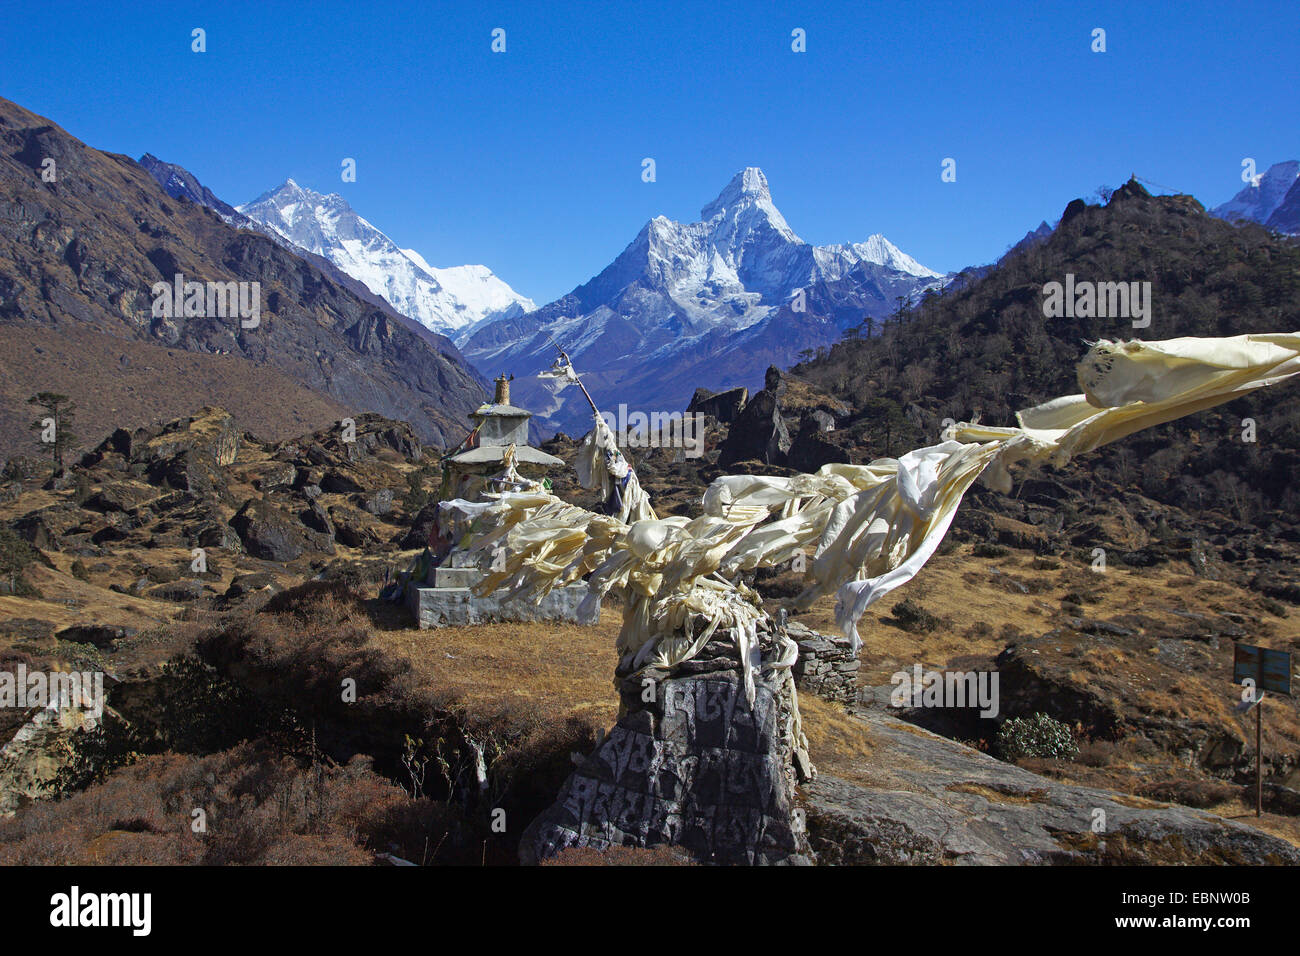 El Ama Dablam, vista desde la ruta entre Namche Bazar y Khunde, Nepal, Himalaya, Khumbu Himal Foto de stock